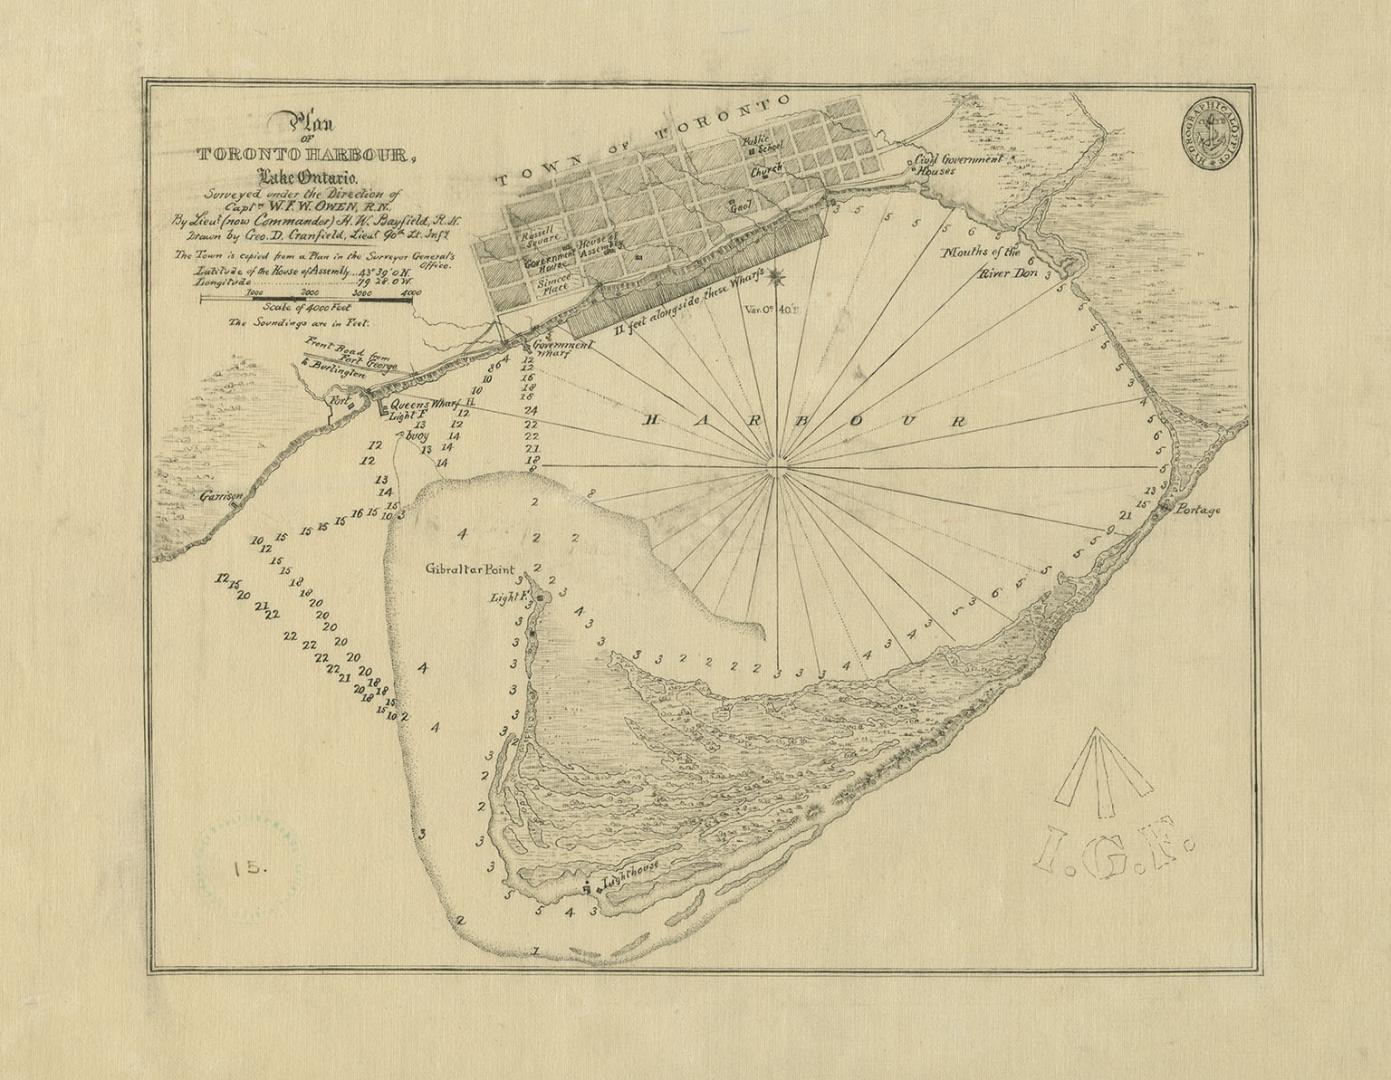 (1828) Plan of Toronto Harbour, Lake Ontario surveyed under the direction of Captn W.F.W. Owen, R.N 